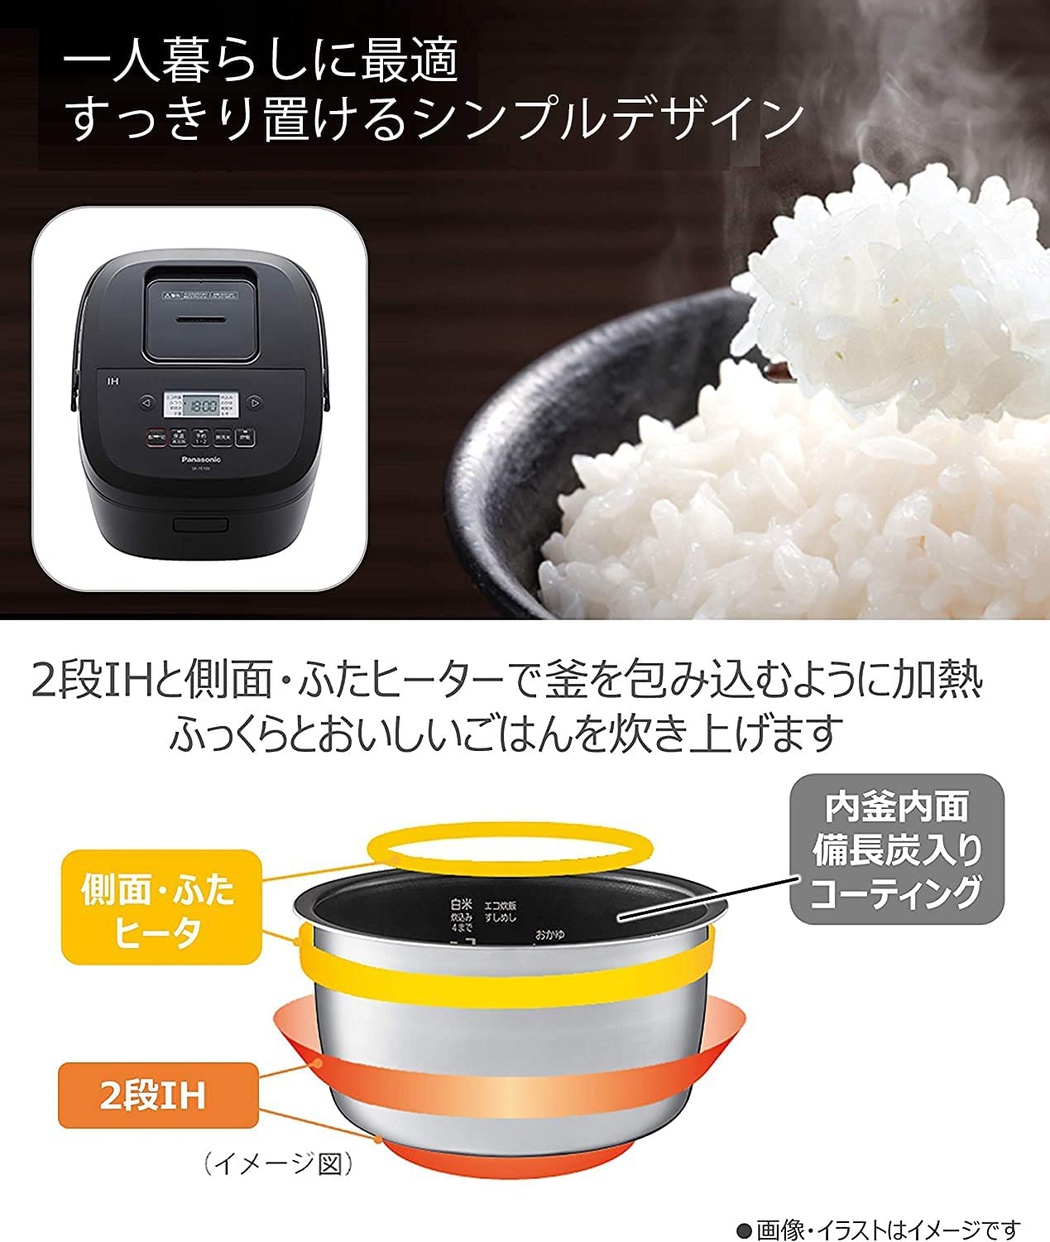 Panasonic(パナソニック) IHジャー炊飯器 SR-FE109の商品画像2 